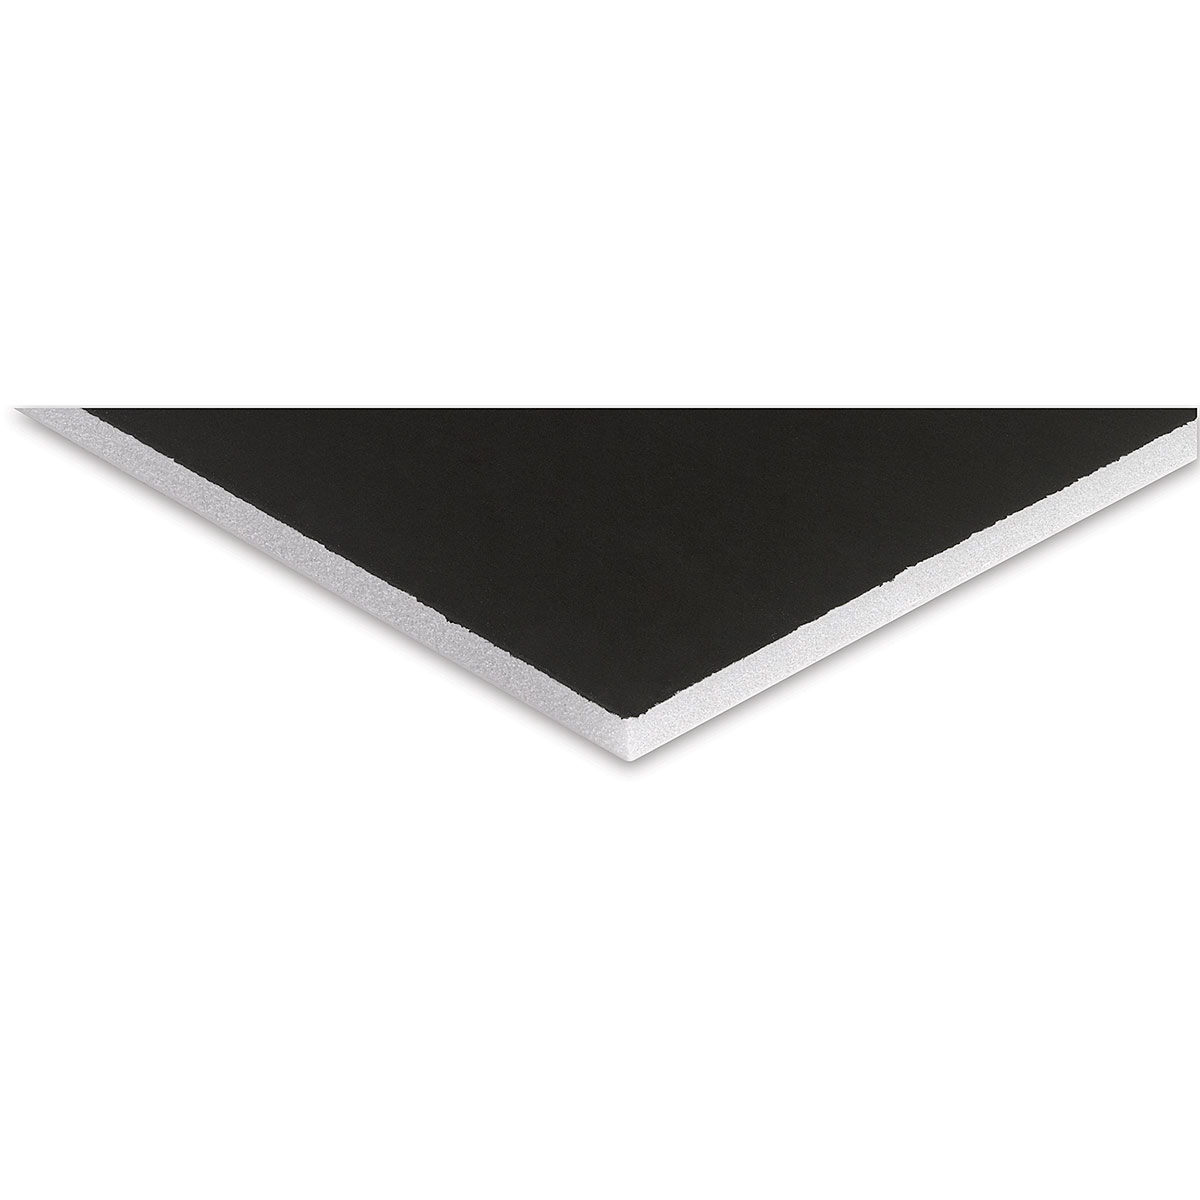 Black Foam Core Board, Black Core Board, Foam Core, Foam Core Sizes, 40x60  10mm Black Foam Core Board, Art Supplies Geelong & Melbourne, Artworx:  Victoria, Australia at